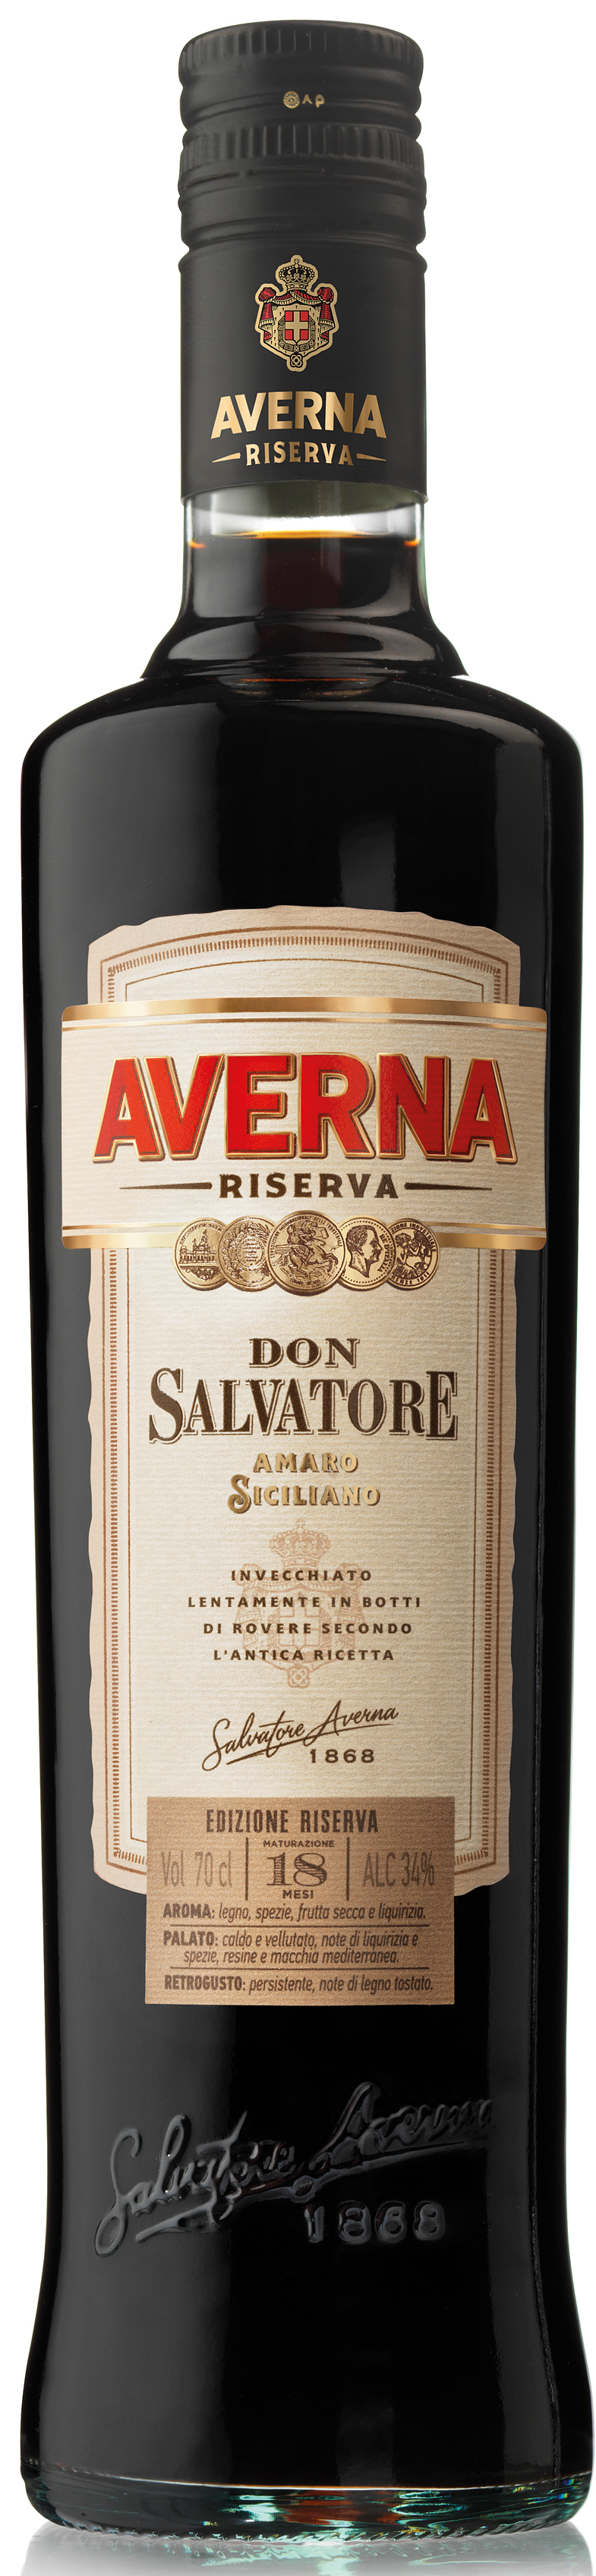 Averna Don Salvatore 34 % 0,7 l